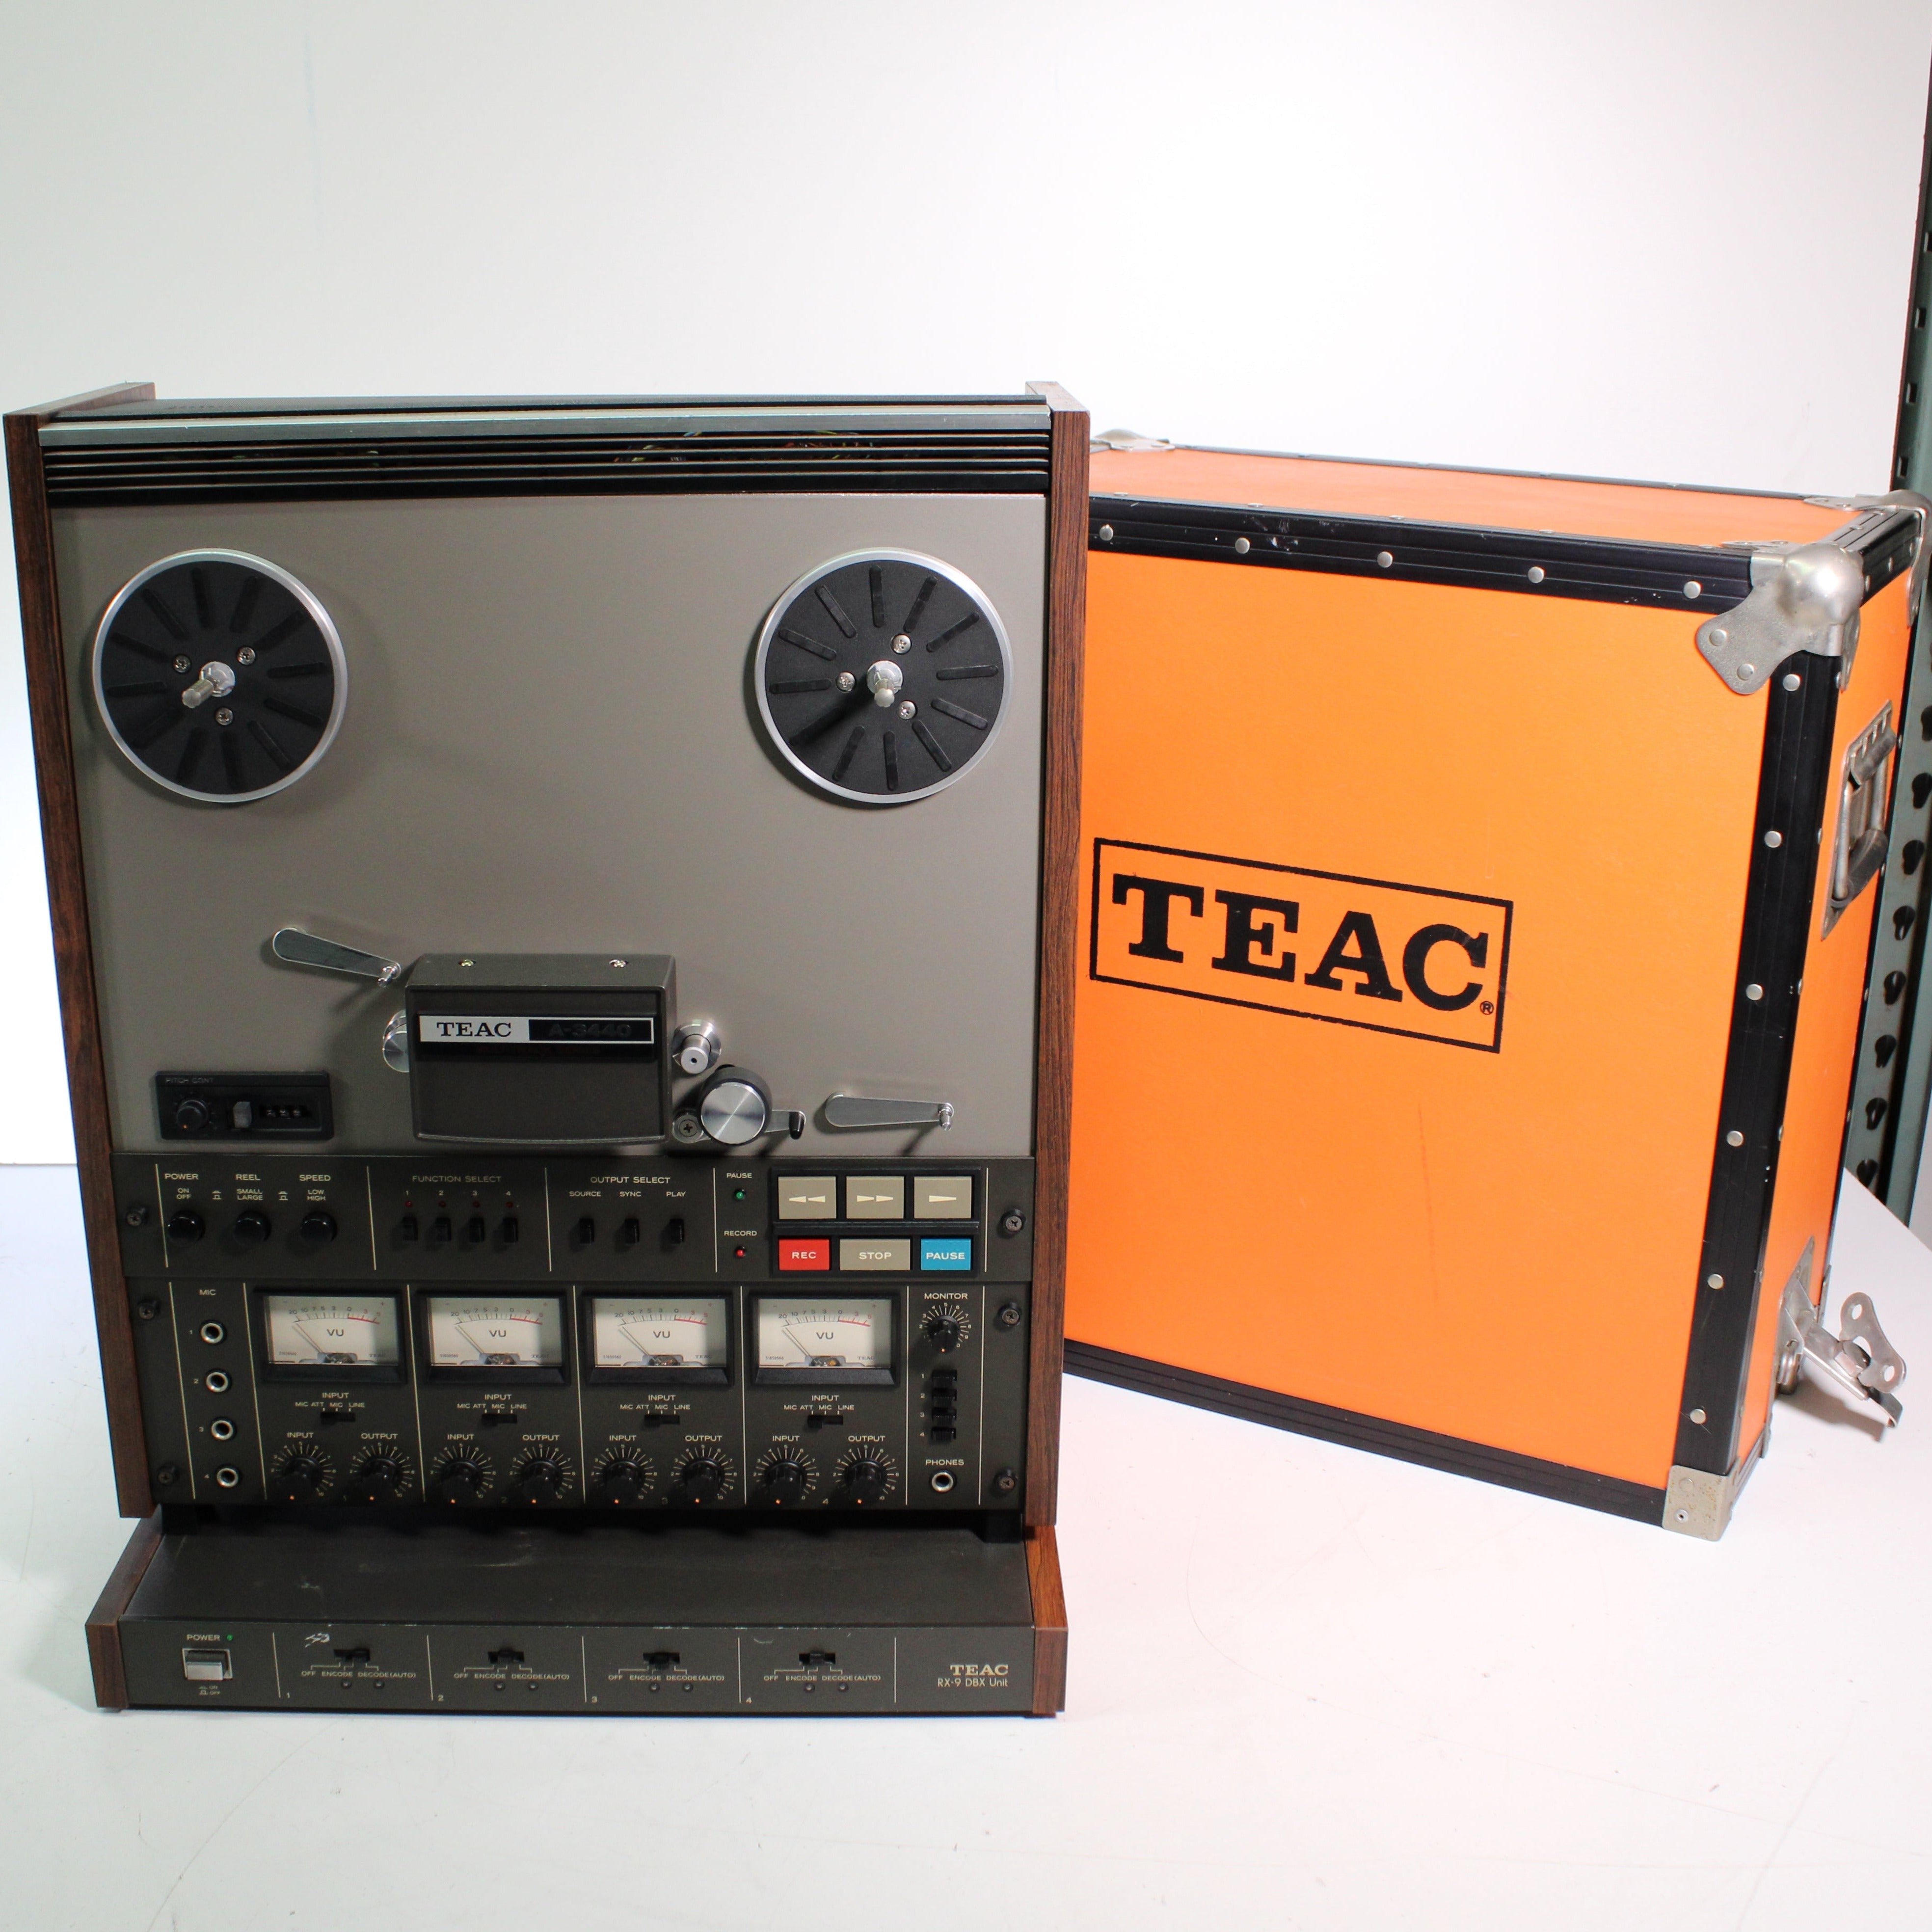 Teac 3440 4 Track Reel To Reel Recorder Teac M2a 6 channel mixer Teac MB20  VU